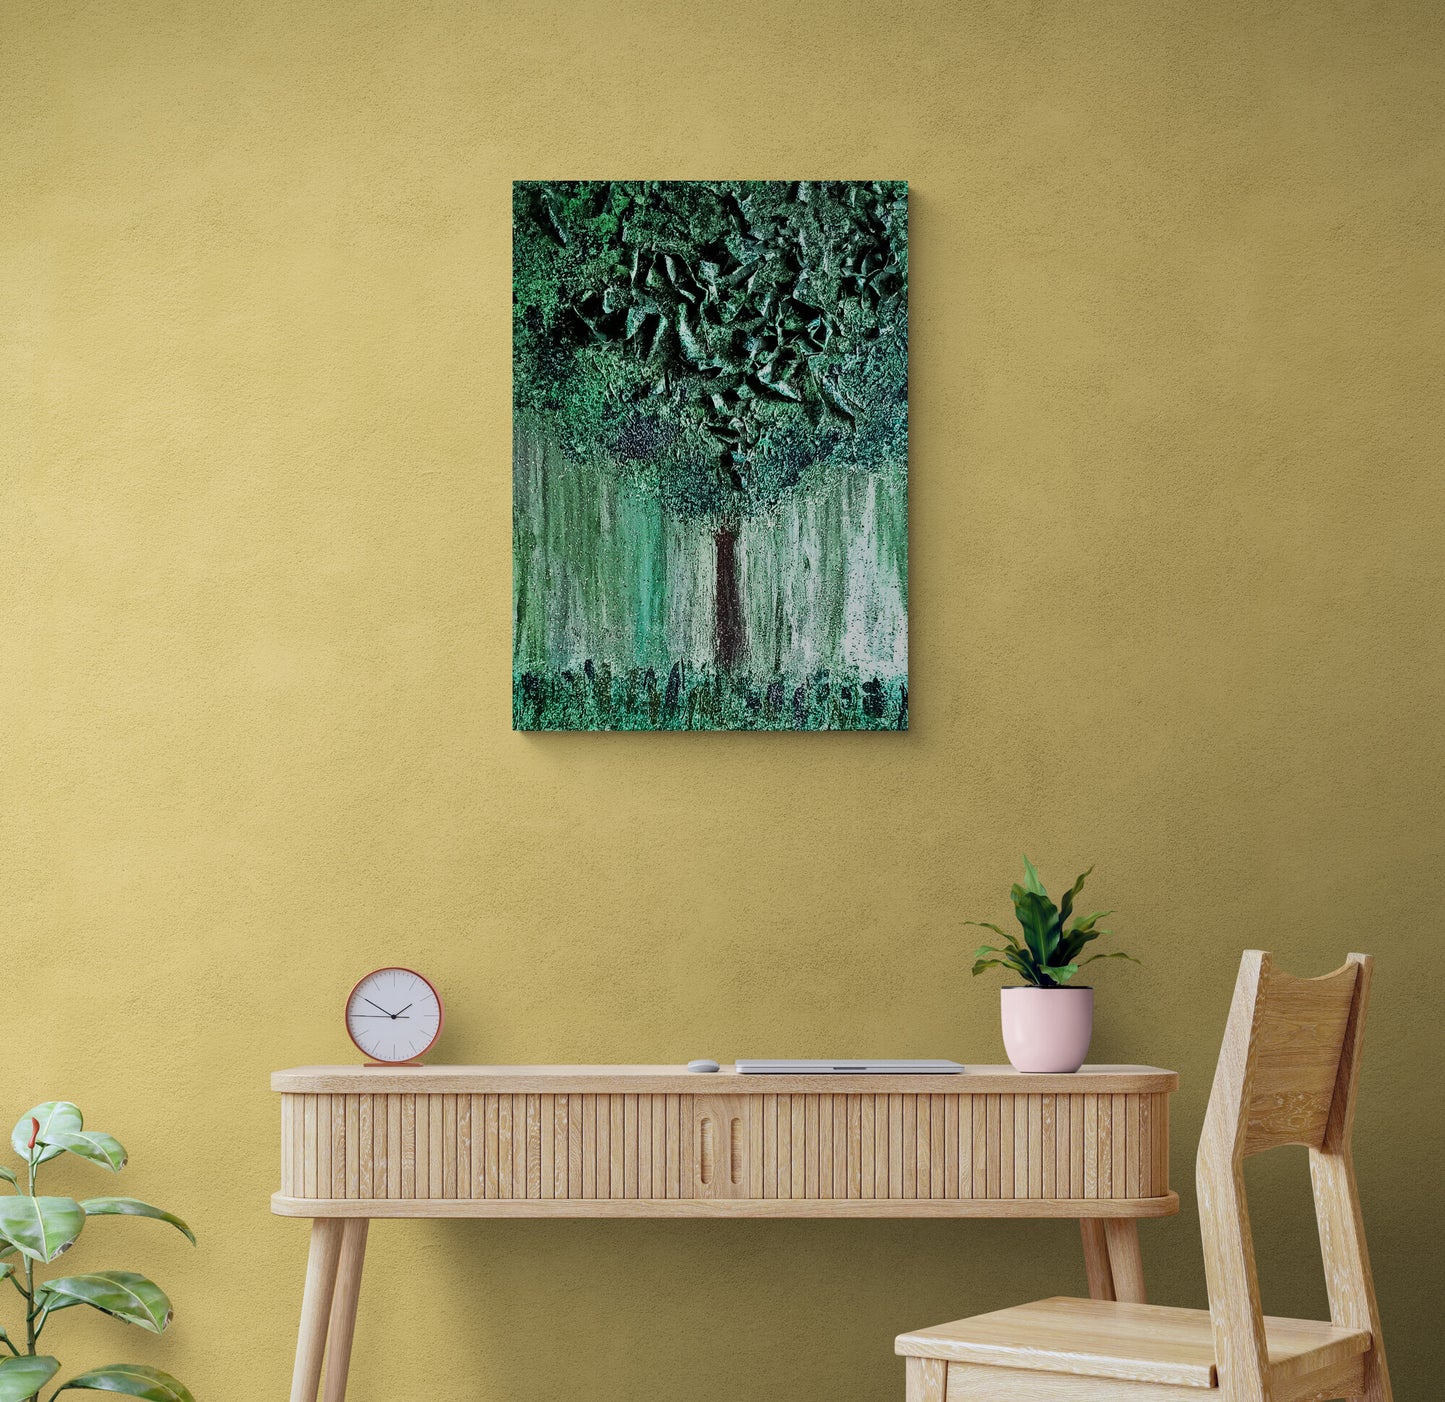 The Tree 3D Art 18"x24" on Canvas